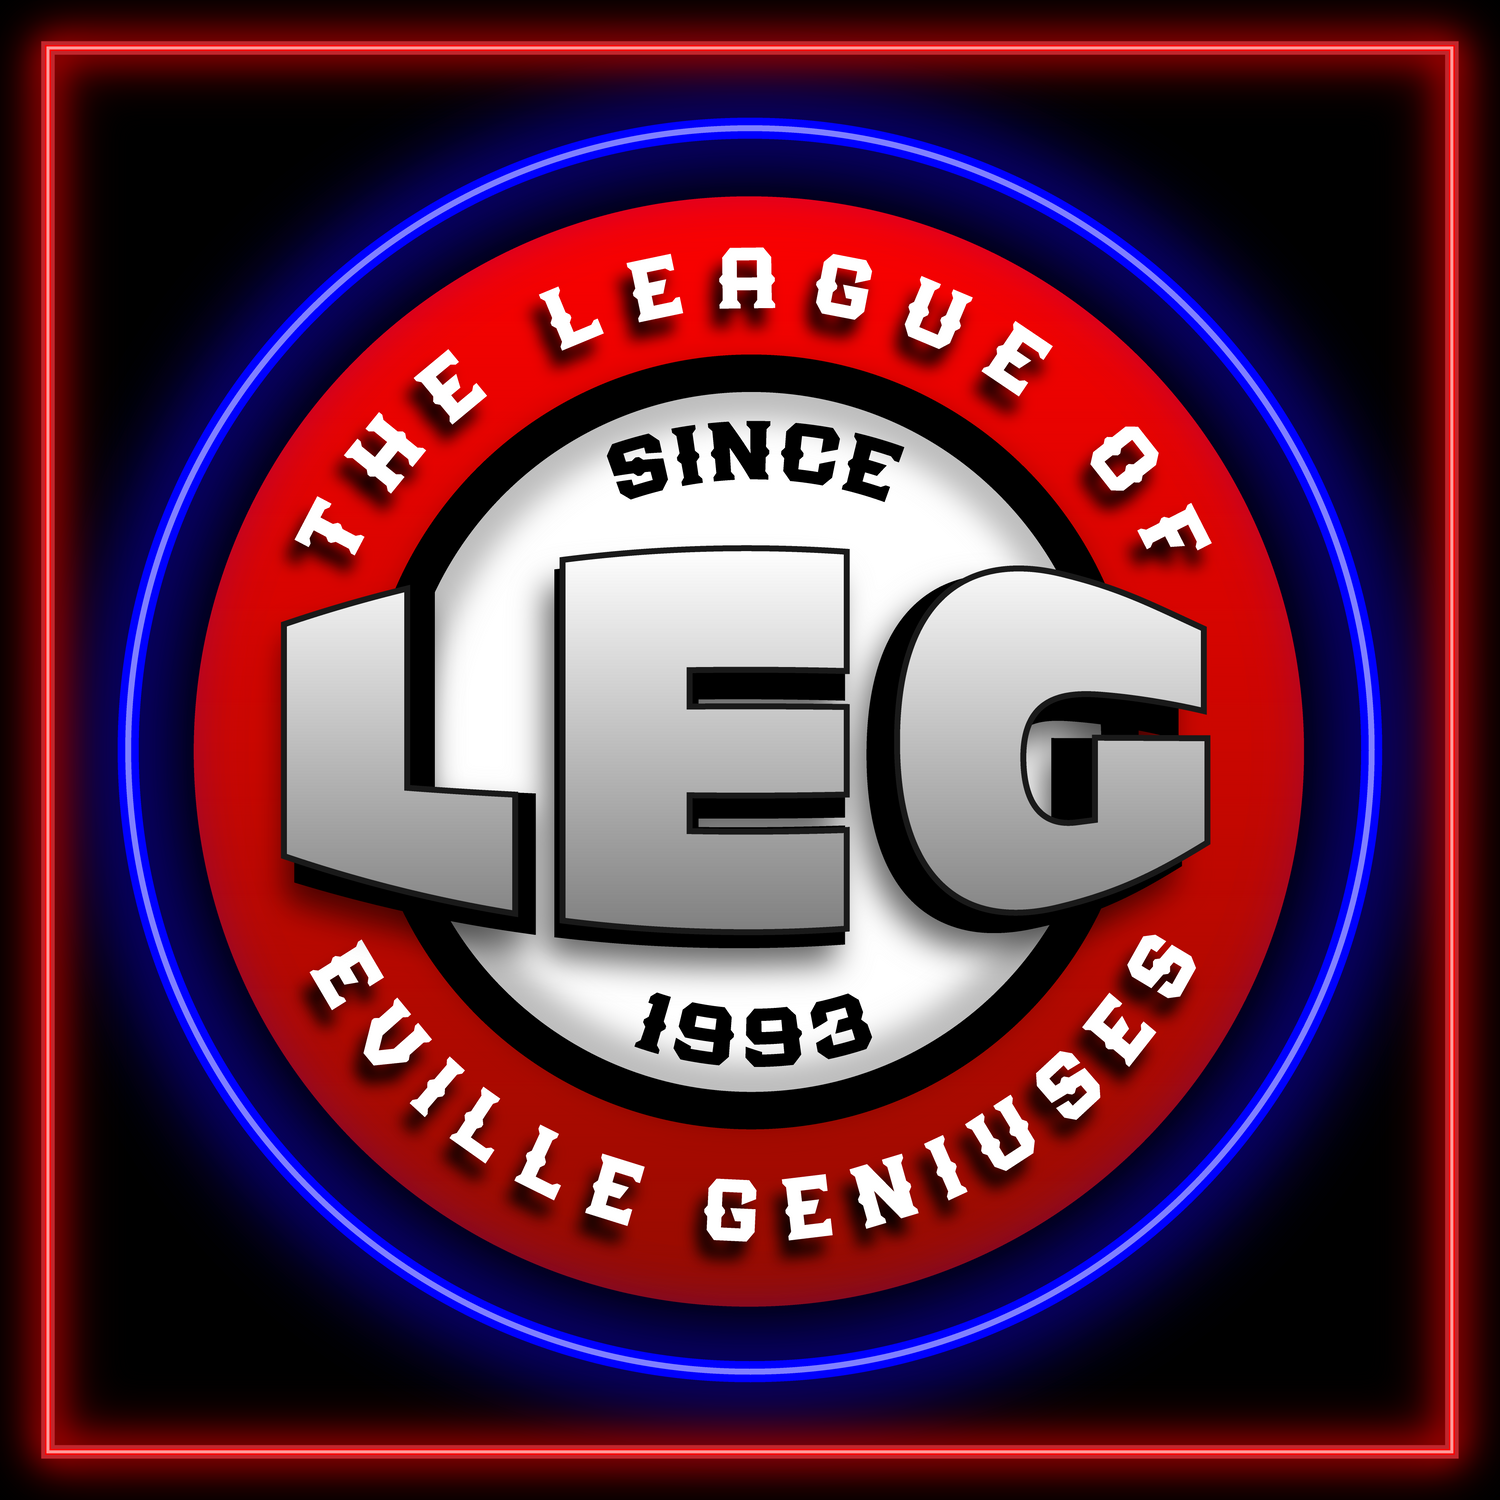 The League of Eville Geniuses Merch